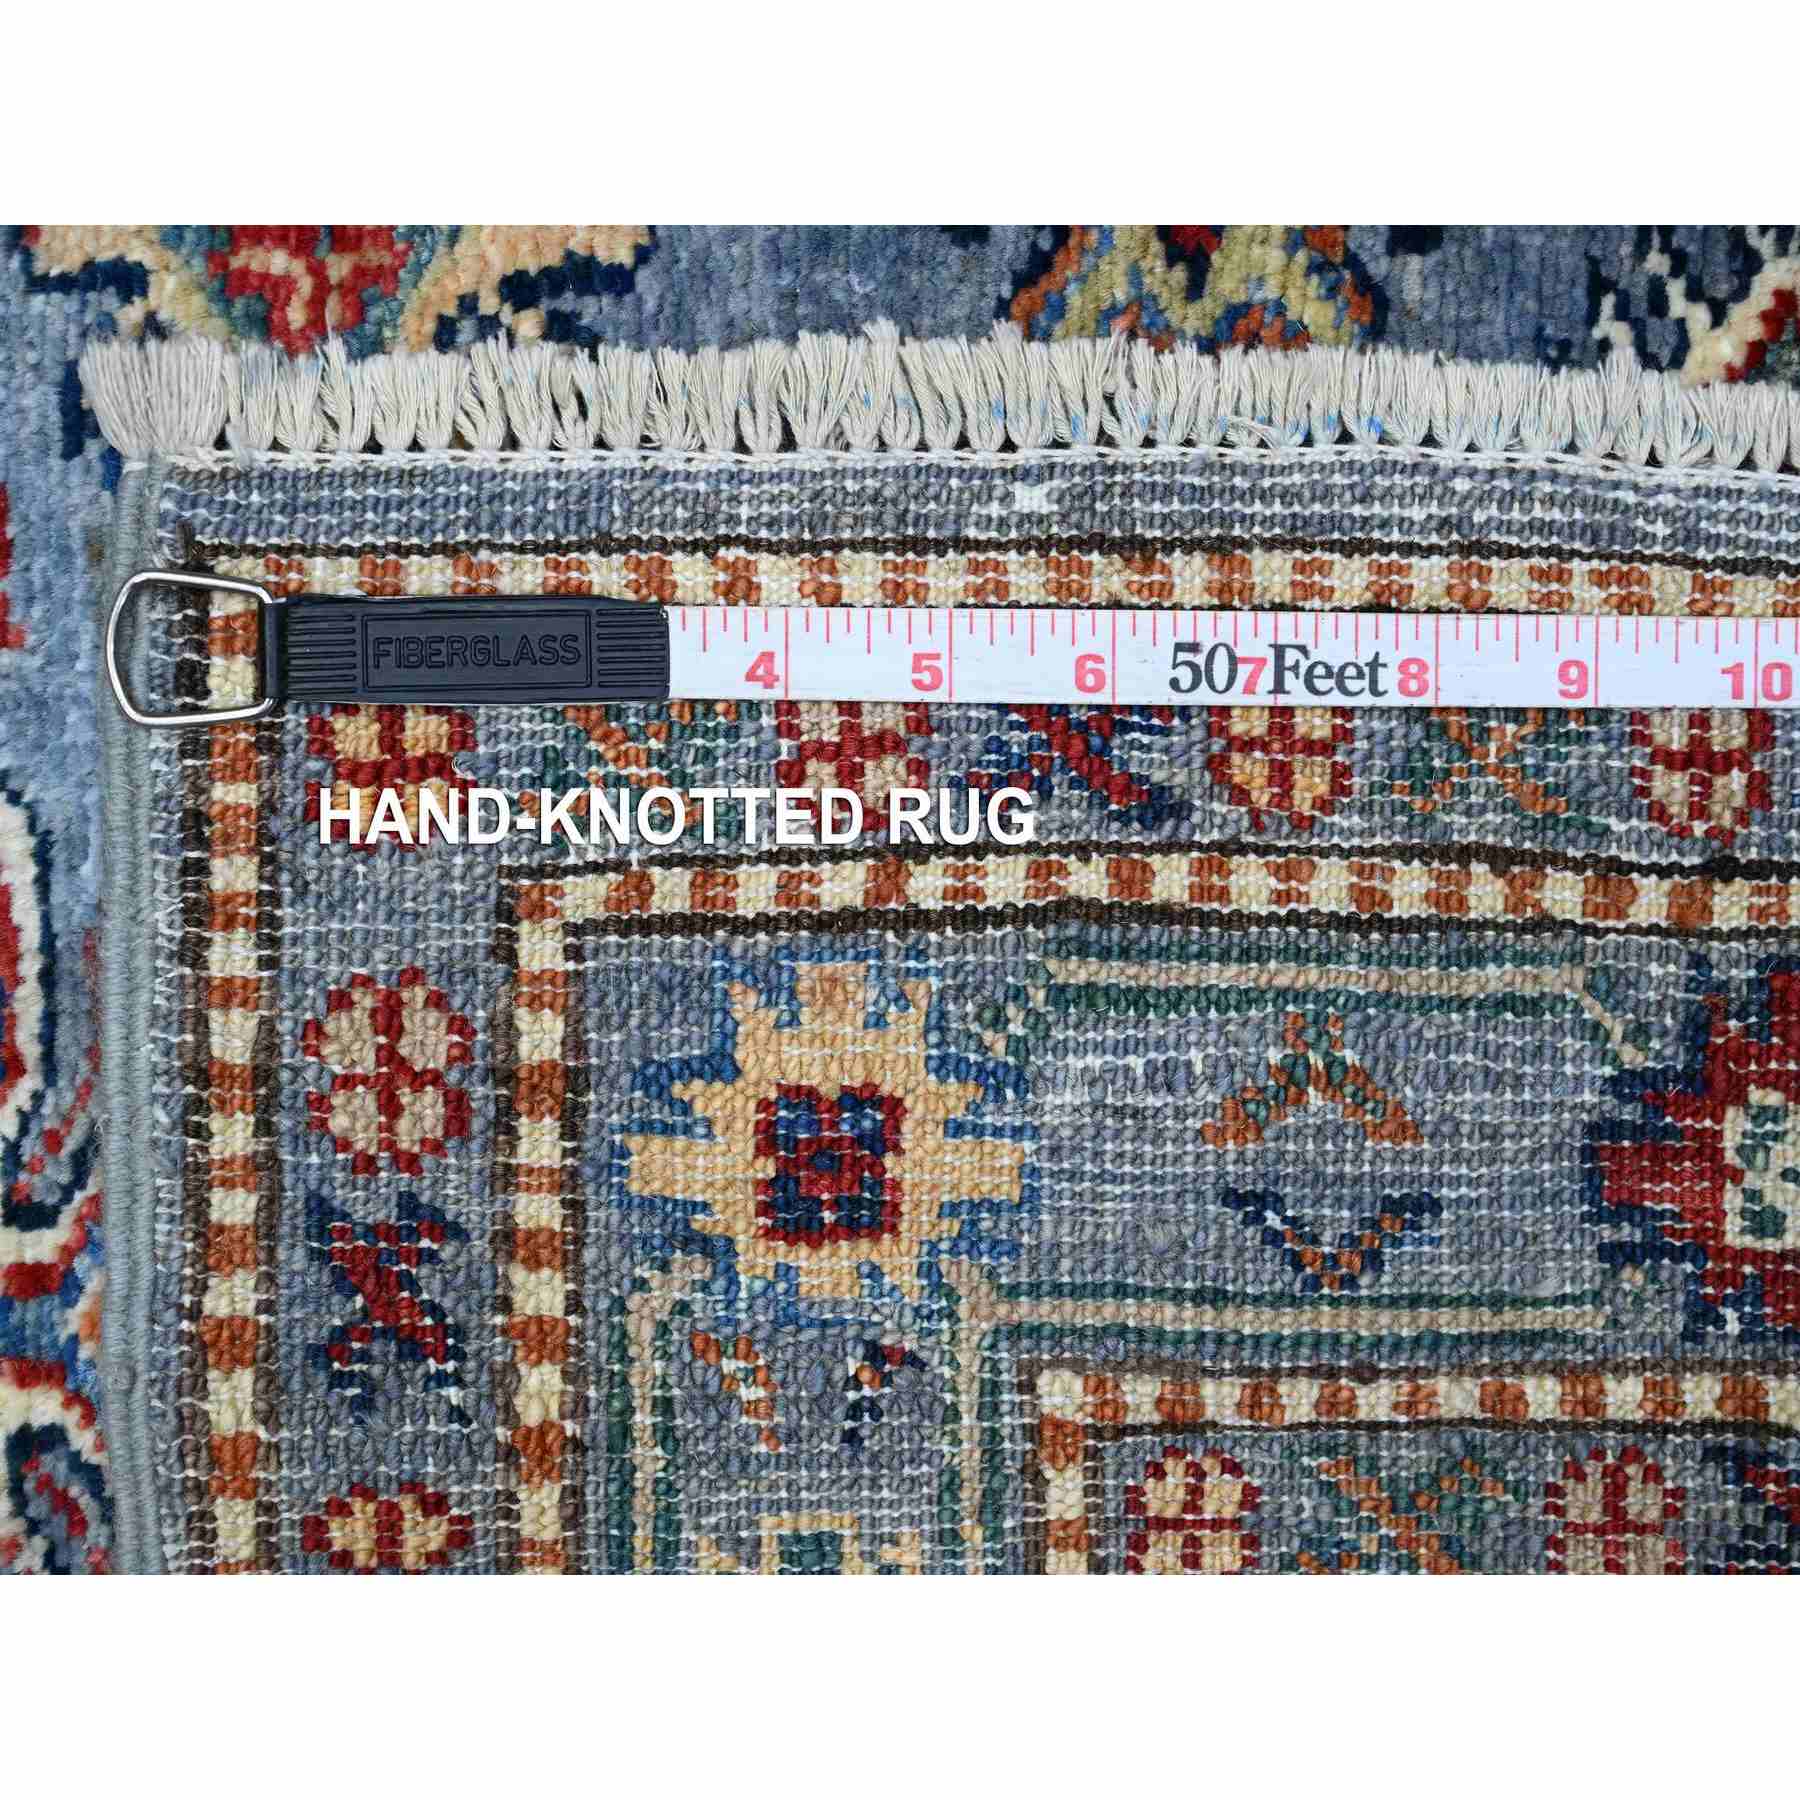 Kazak-Hand-Knotted-Rug-448200